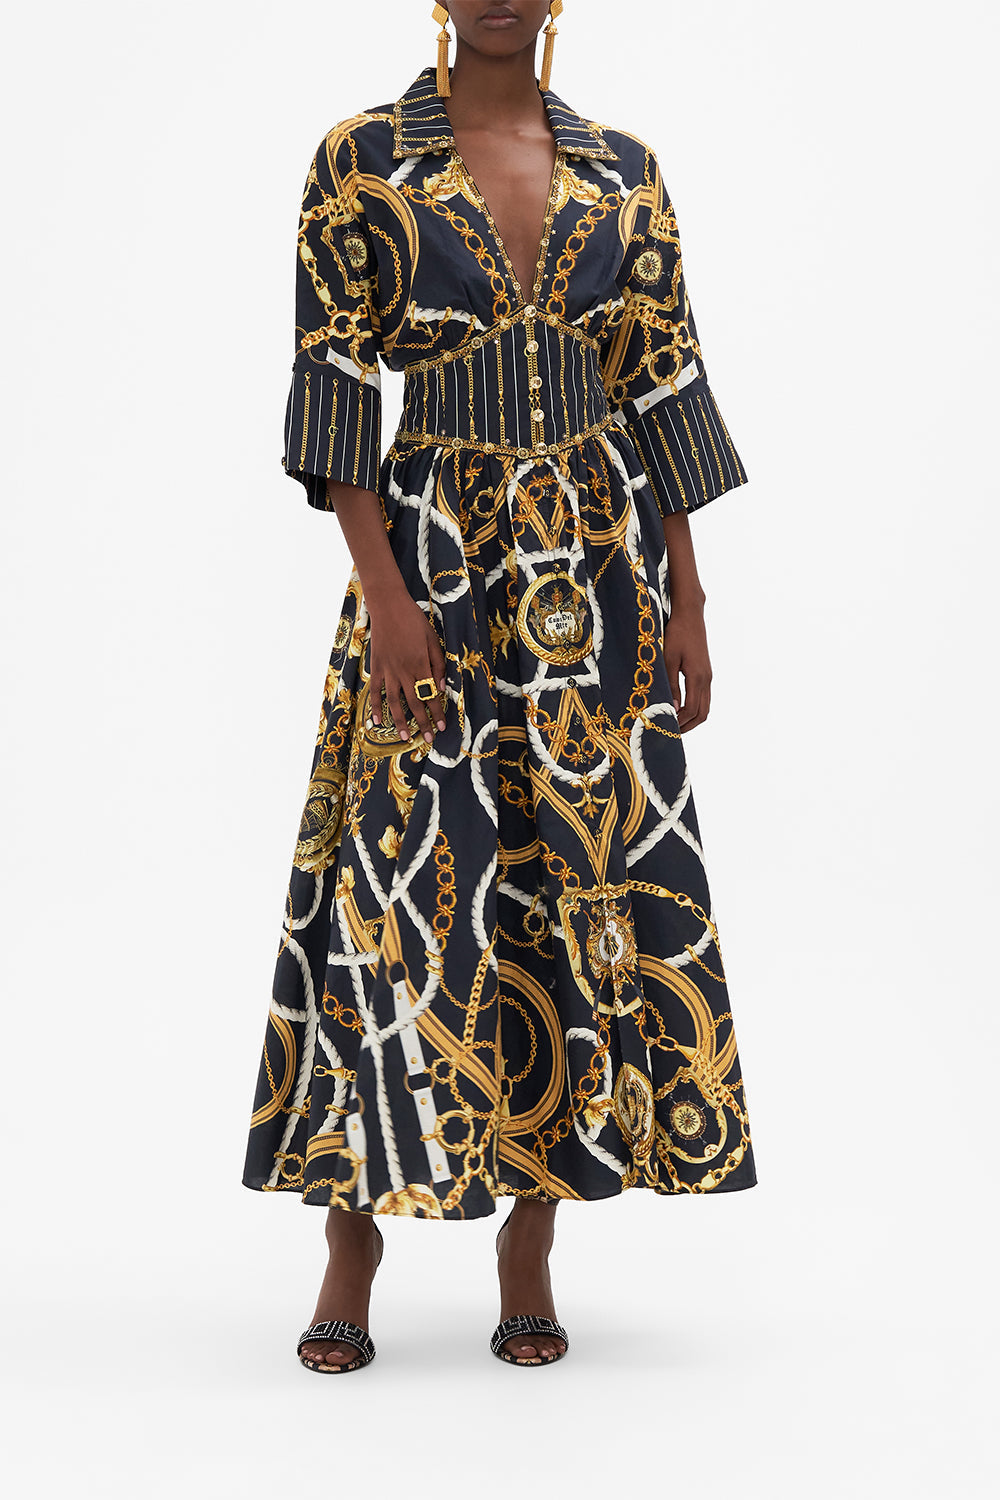 Front view of model wearing CAMILLA silkmidi dress in Coast To Coast print